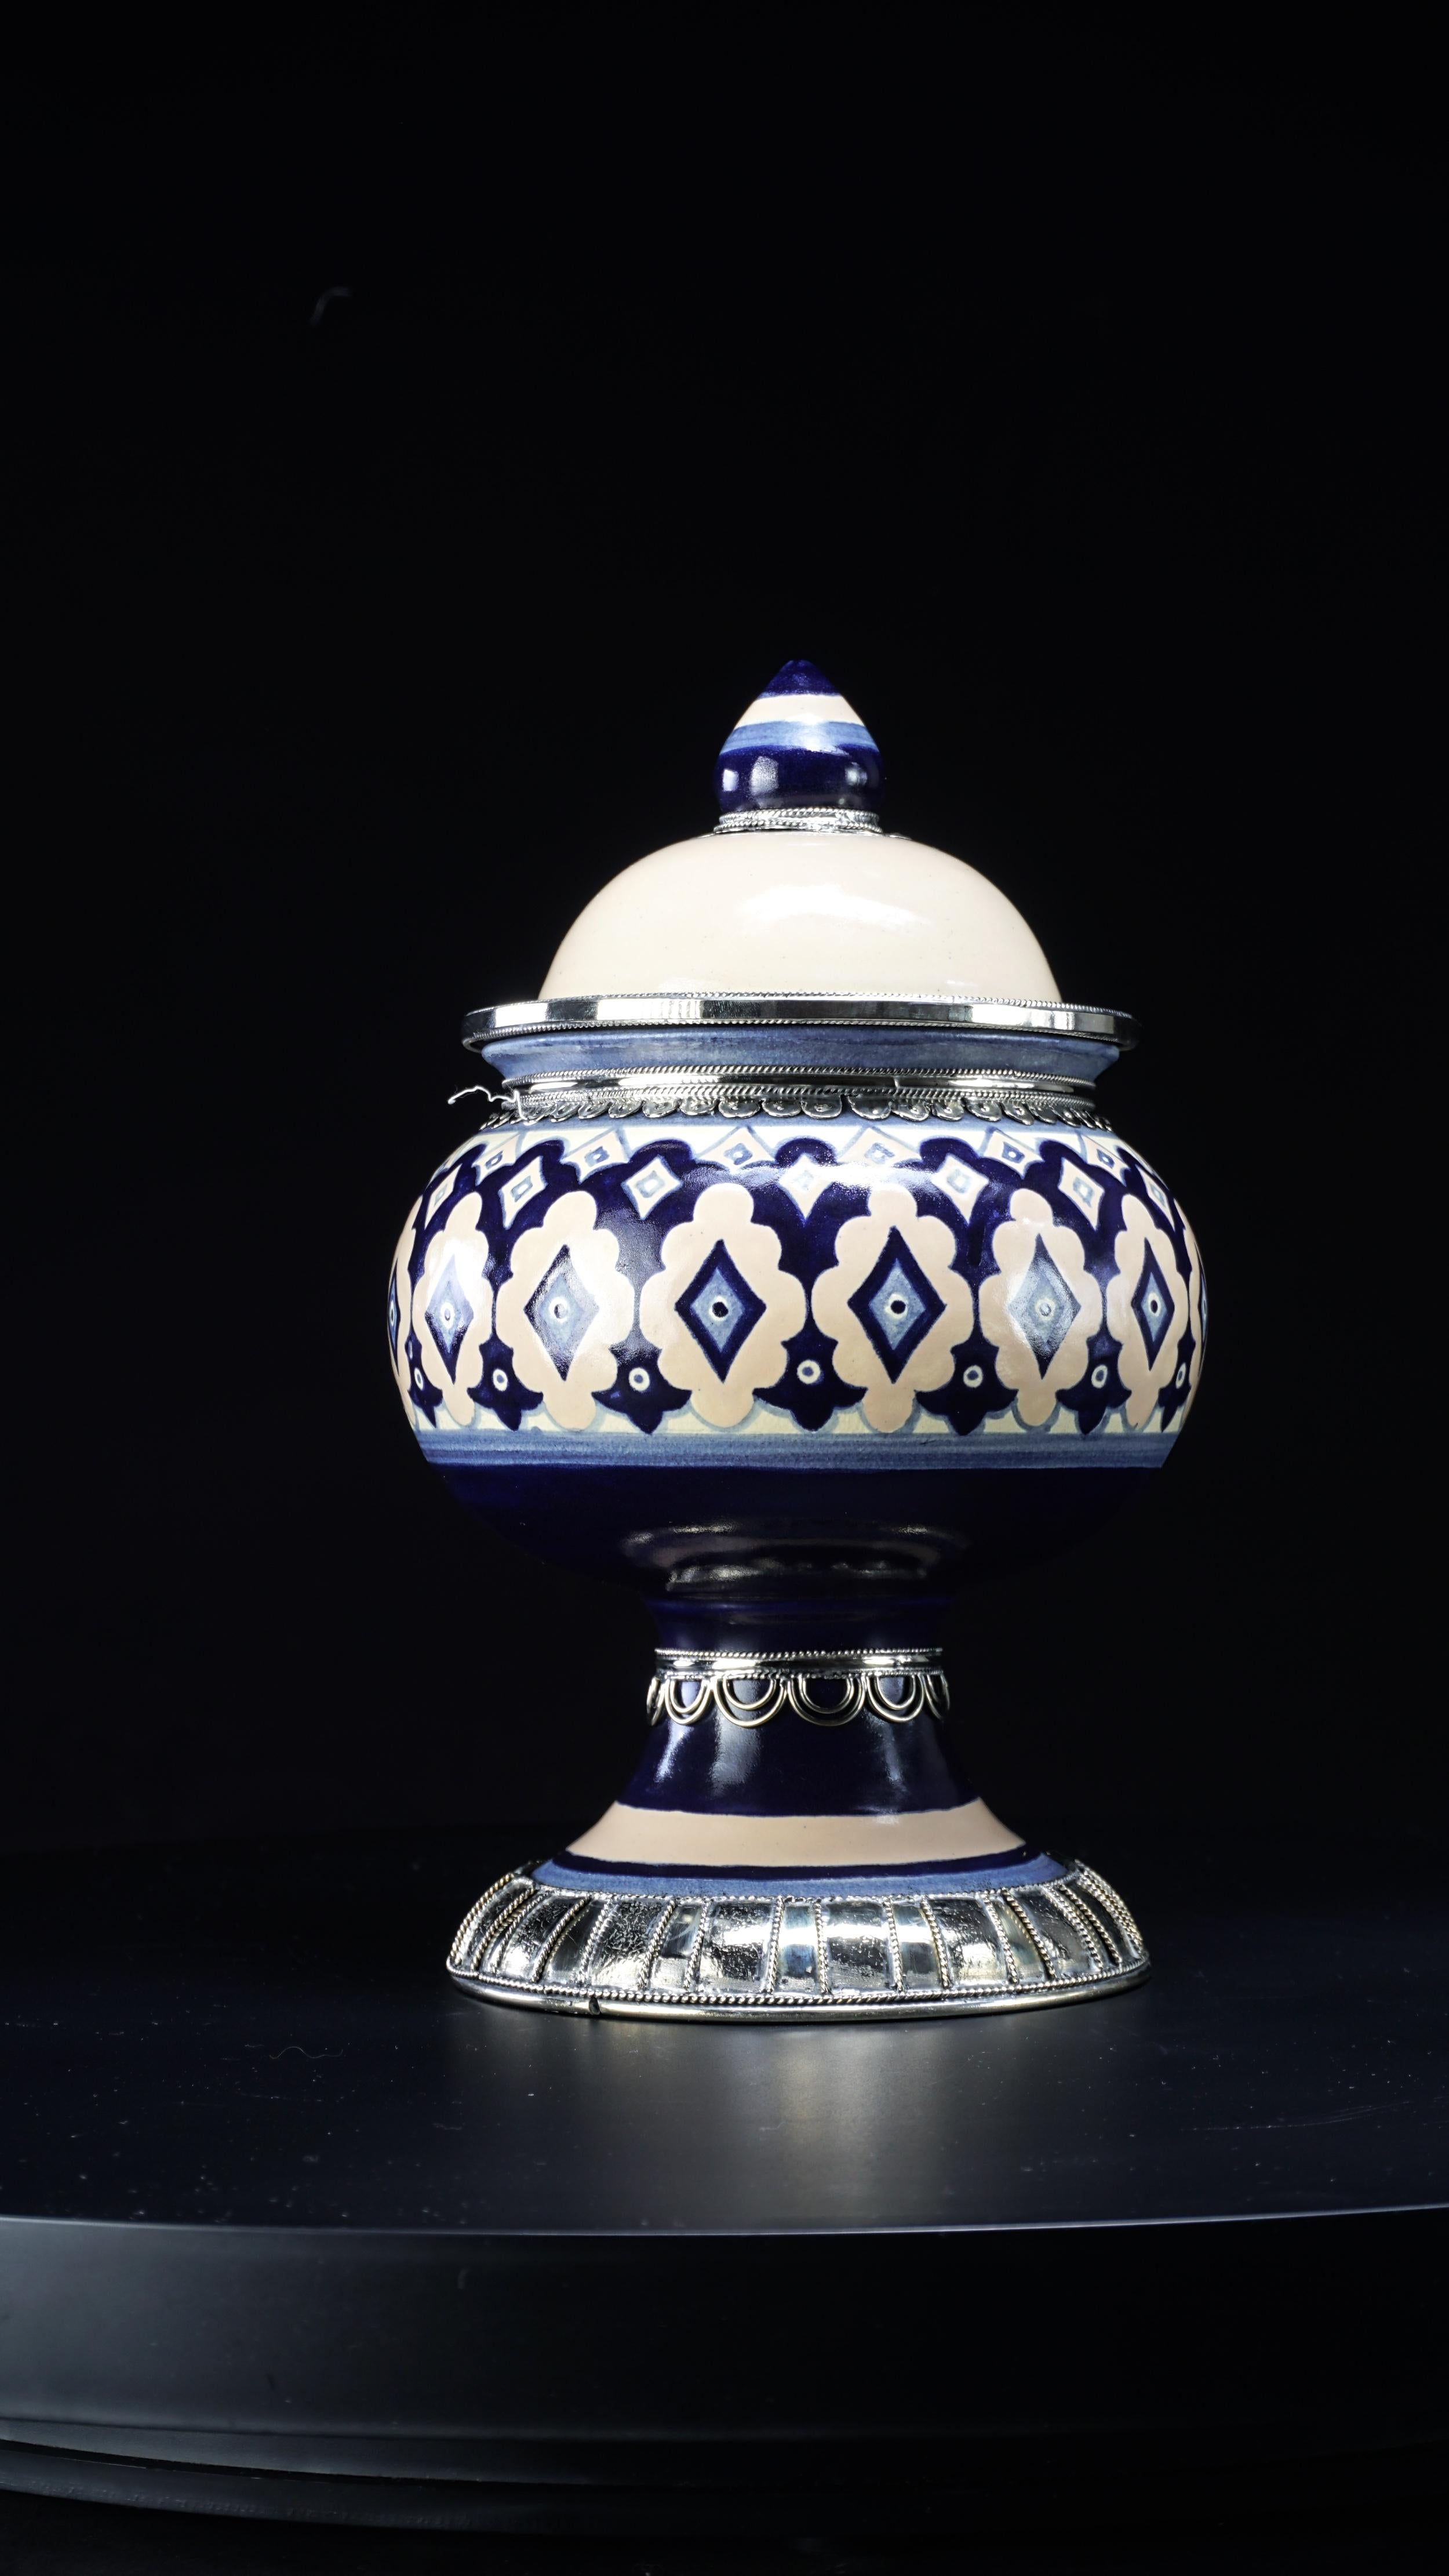 Mexican Blue and White Jar, Ceramic and White Metal ‘Alpaca’, Handmade with Cherubs